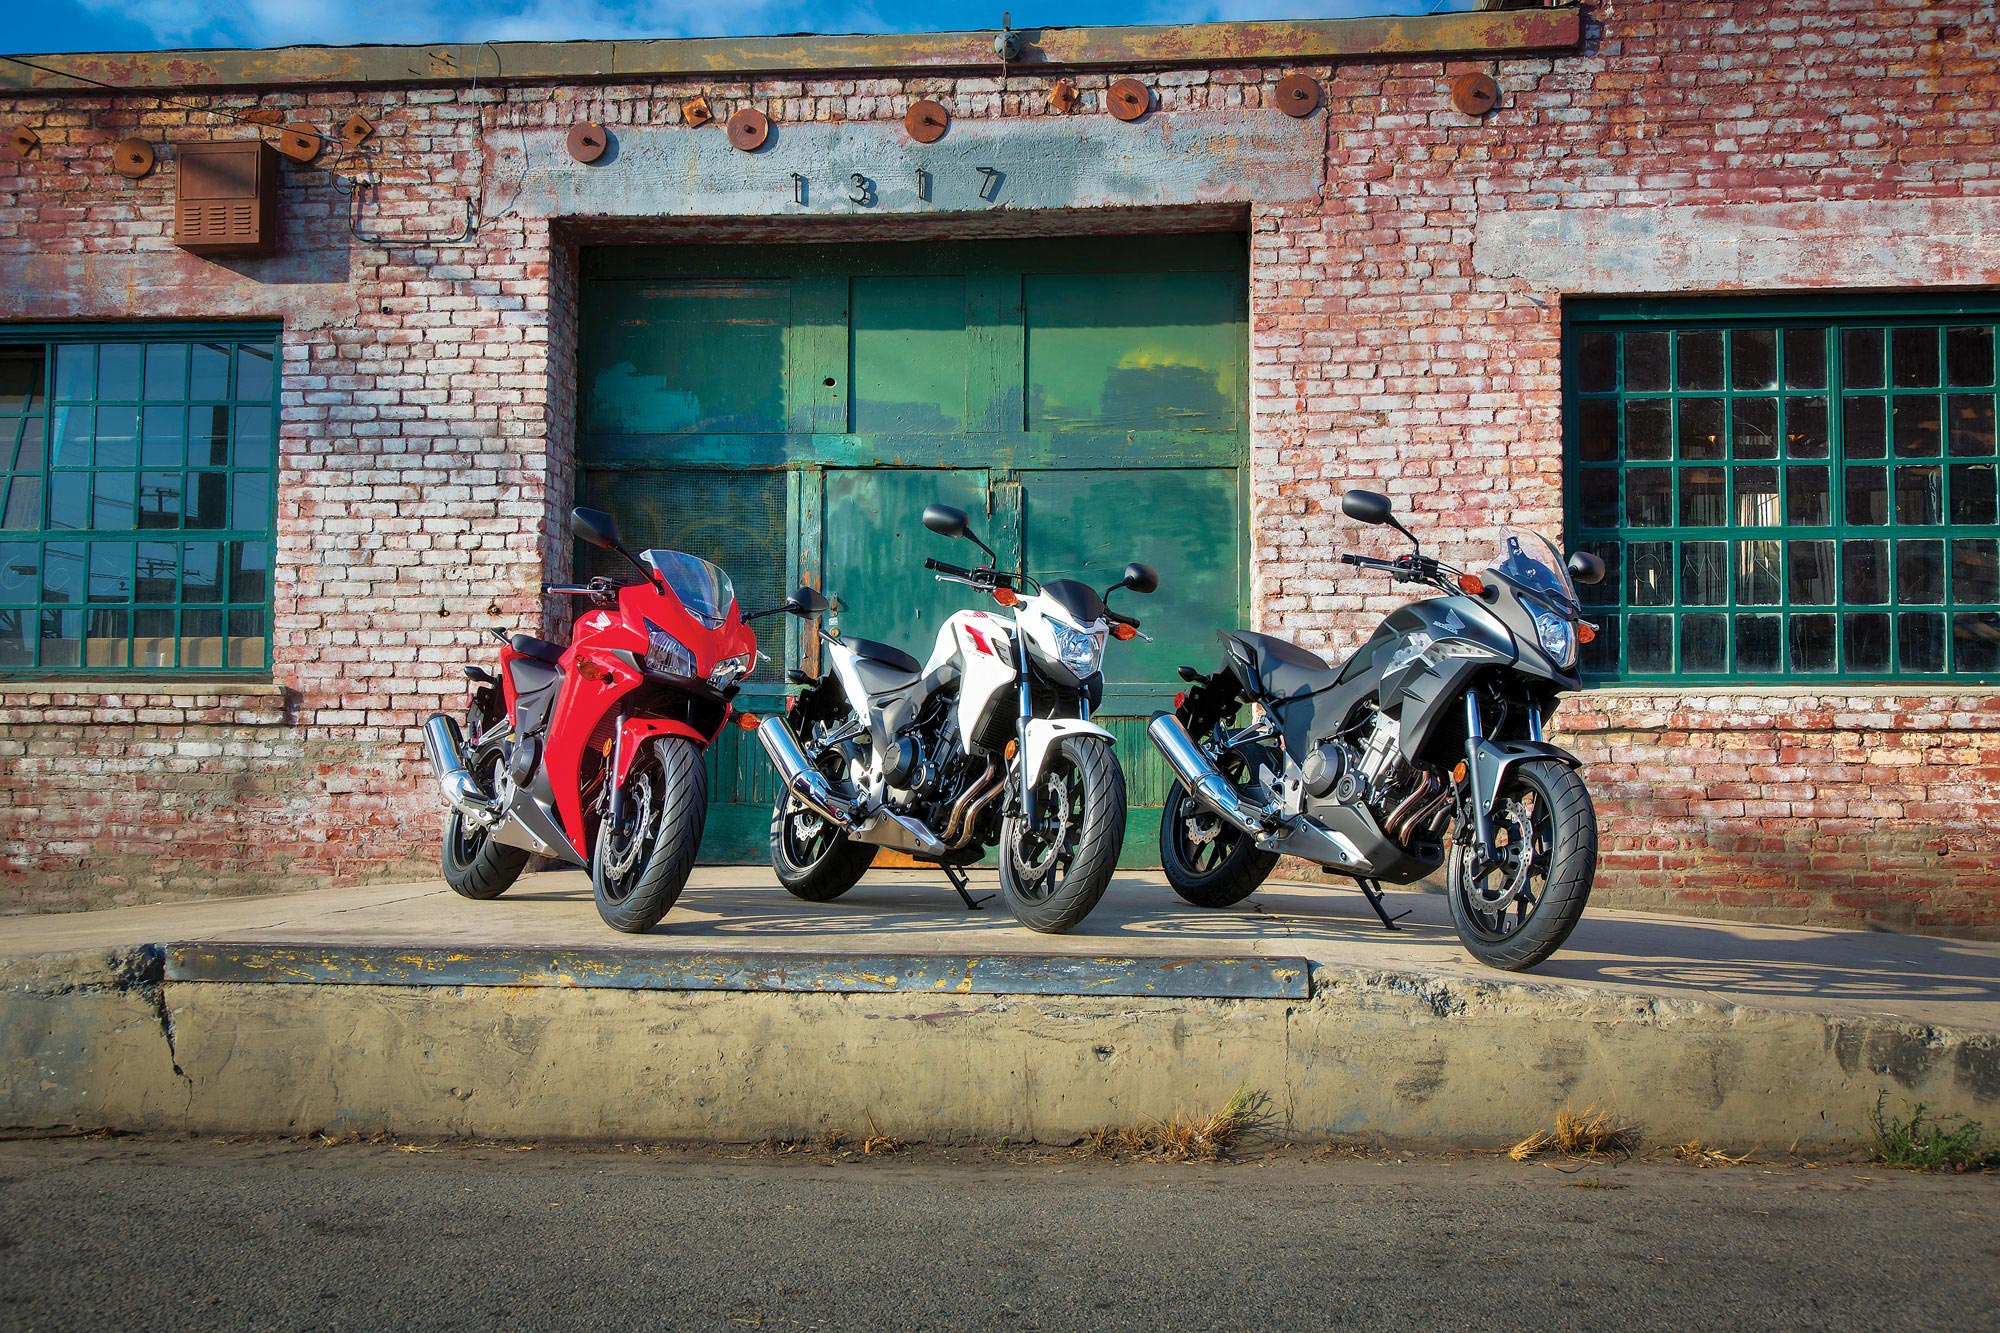 http://www.totalmotorcycle.com/motorcycles/2013models/2013-Honda-CBR500R2.jpg